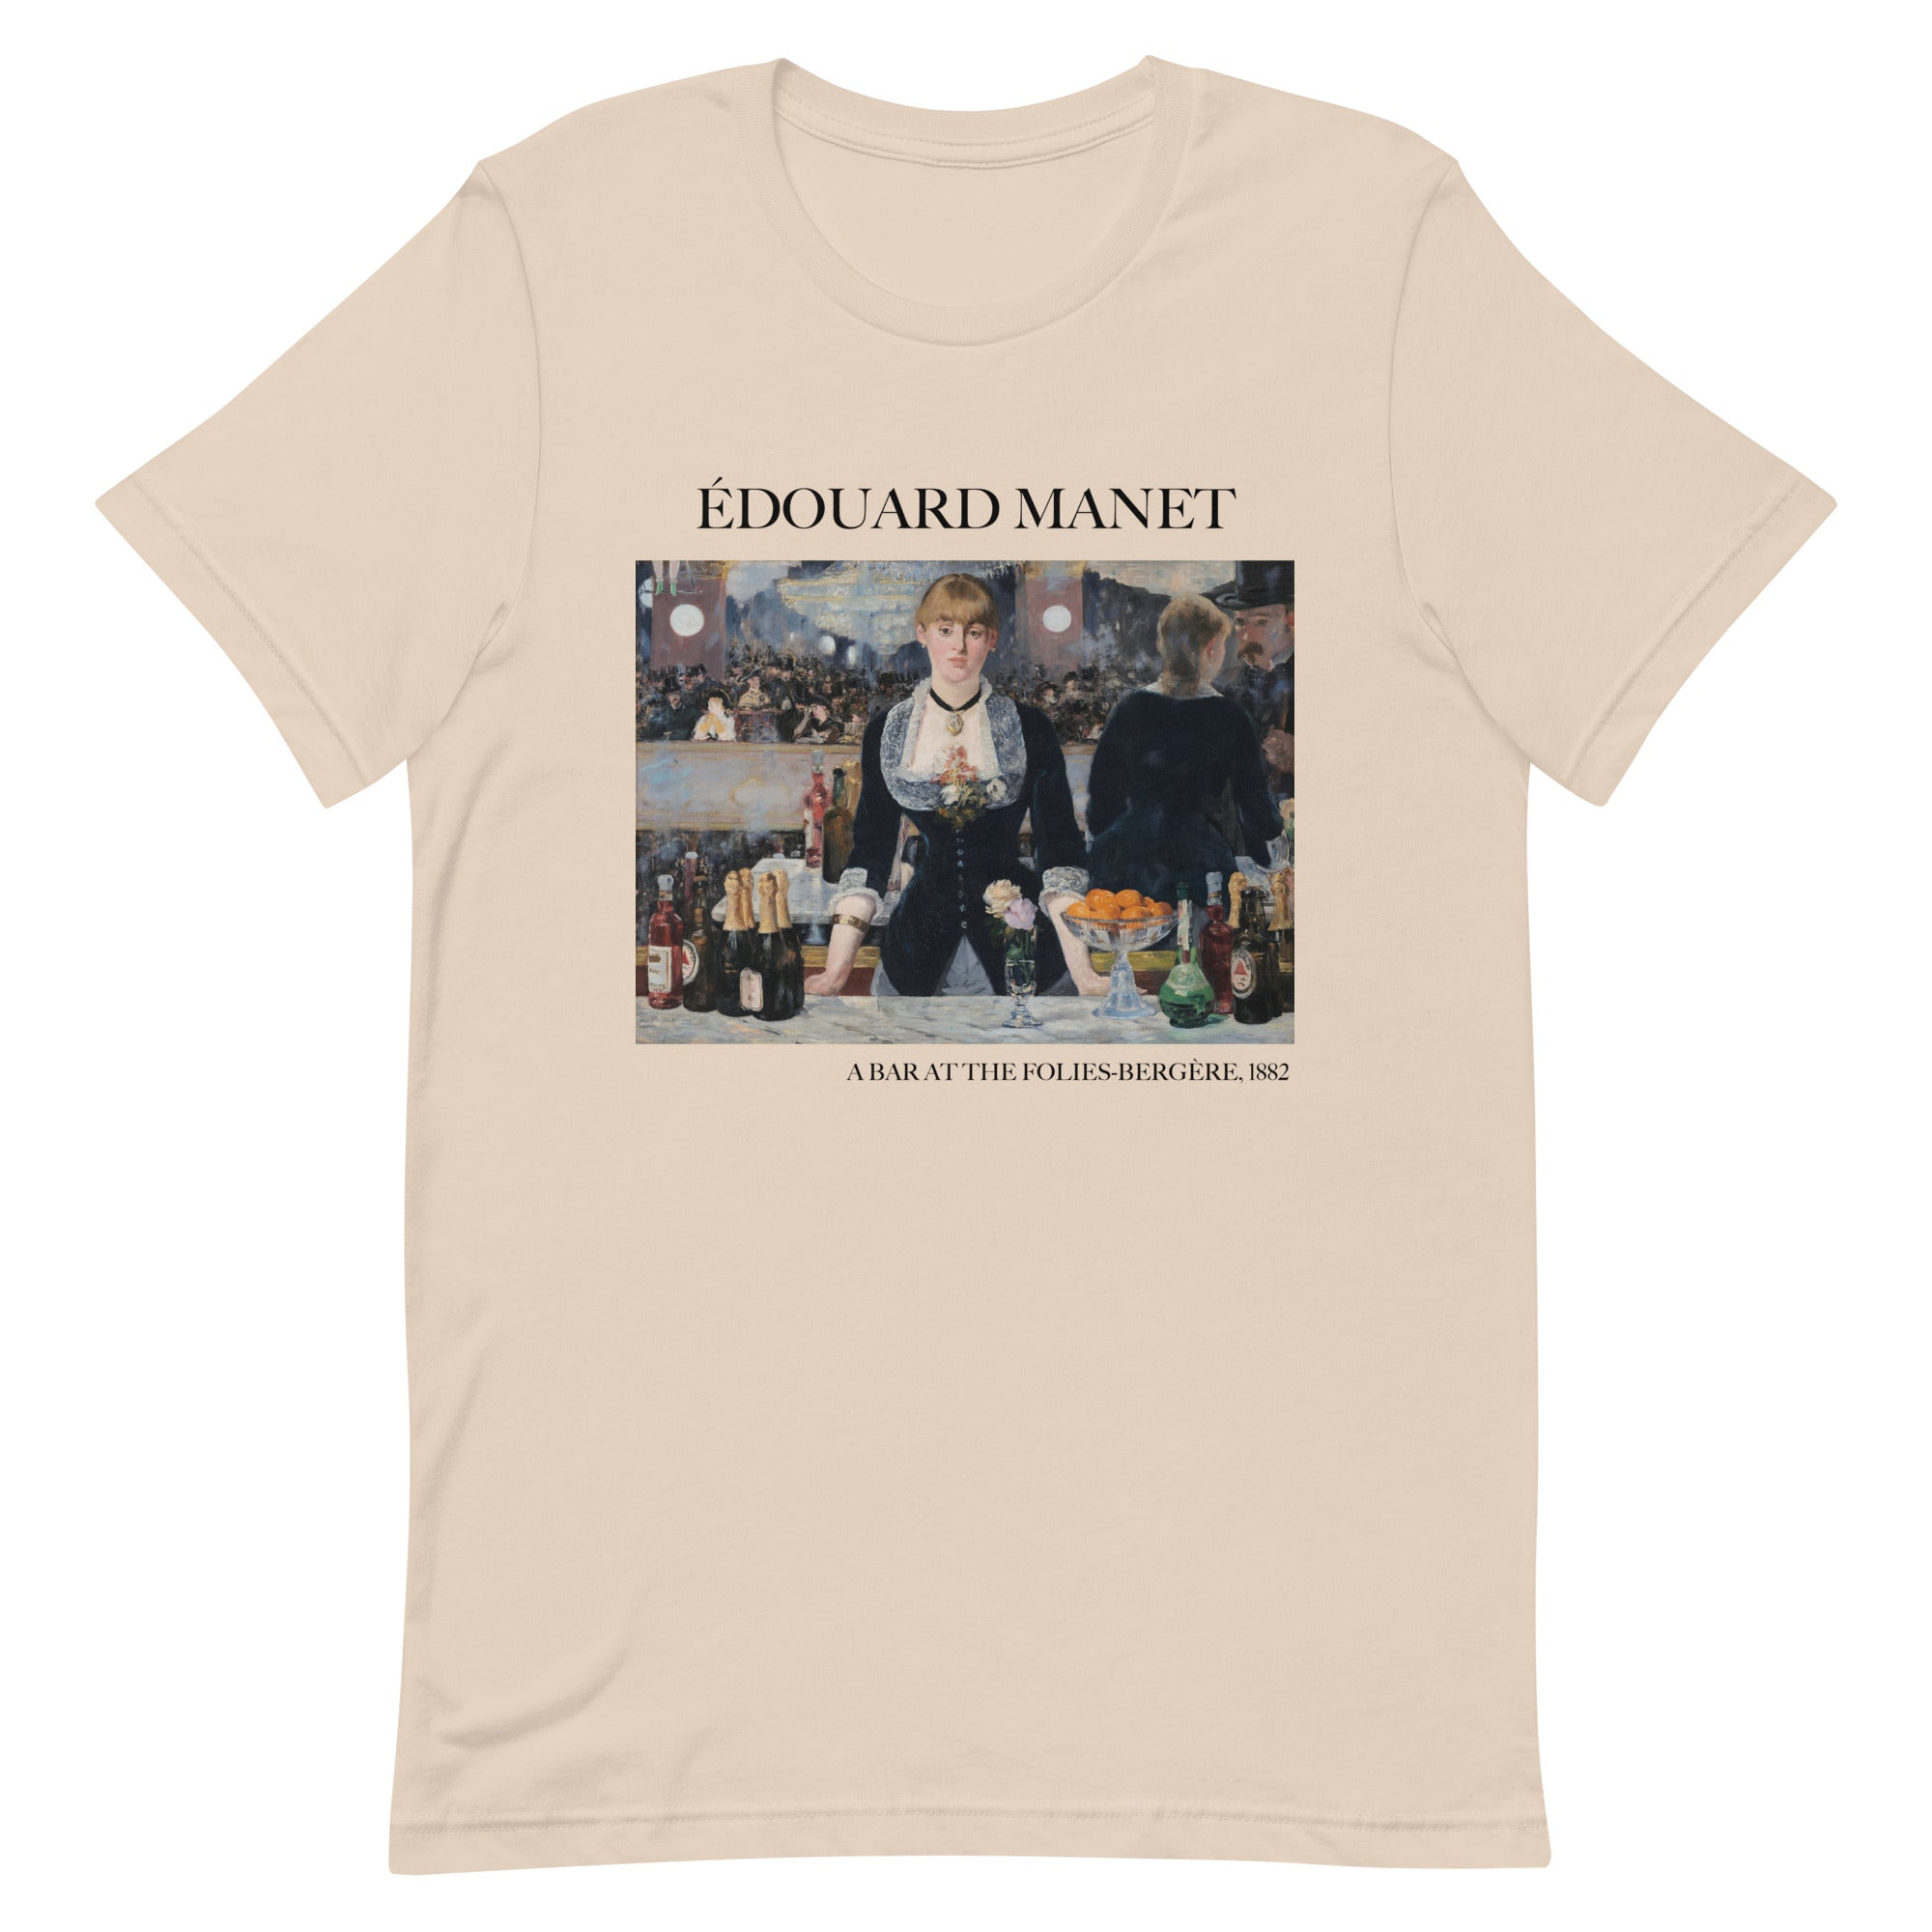 Édouard Manet 'A Bar at the Folies-Bergère' Famous Painting T-Shirt | Unisex Classic Art Tee